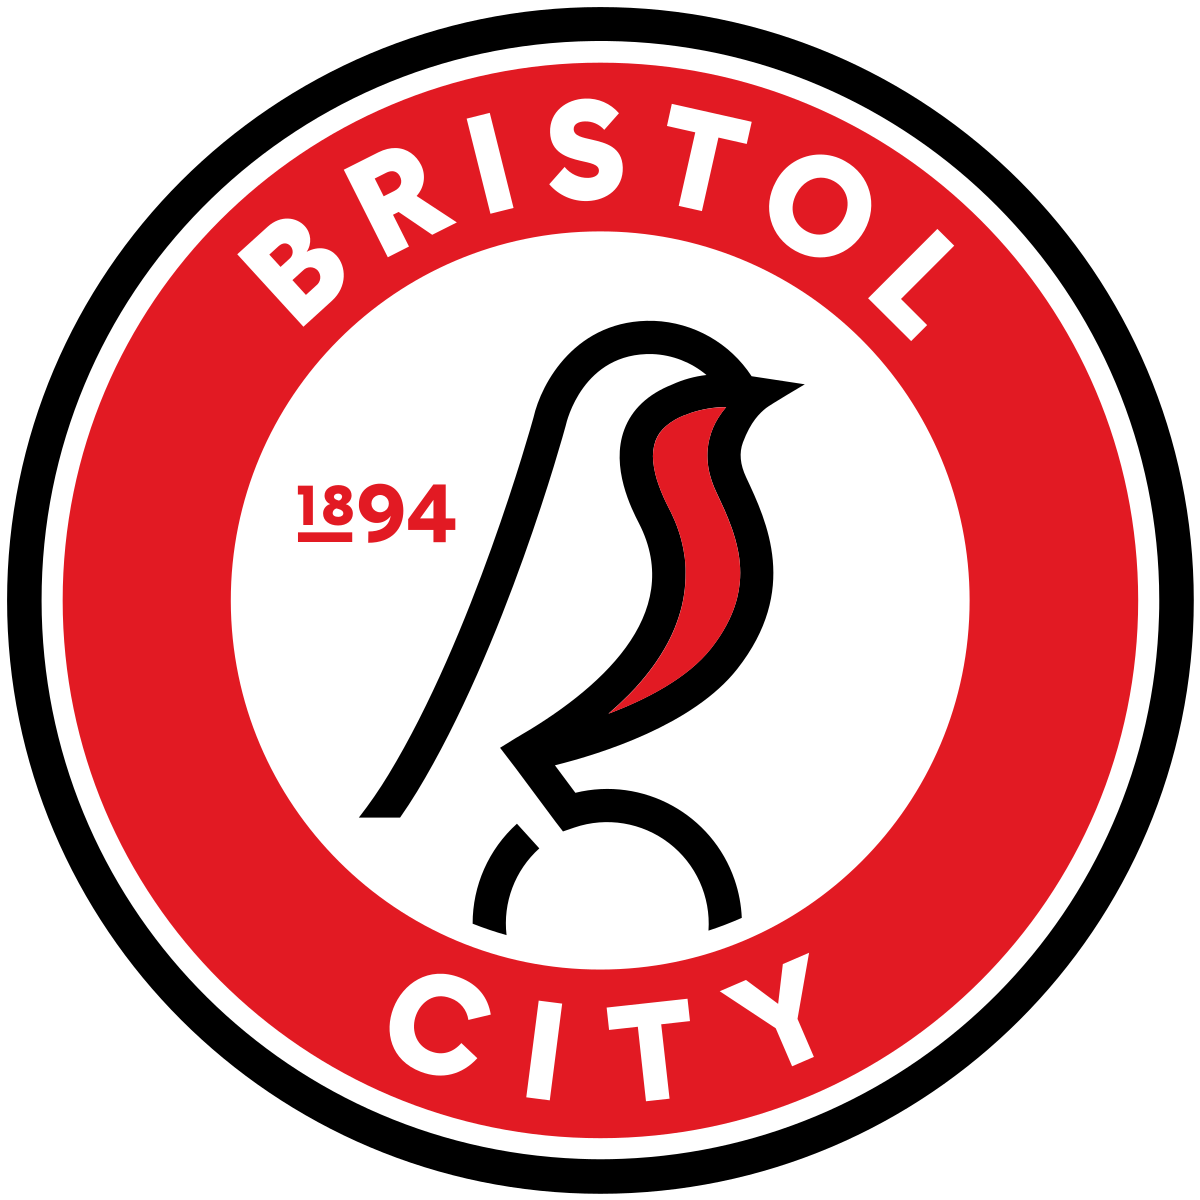 Bristol City v Swansea City - Hospitality 2019/20